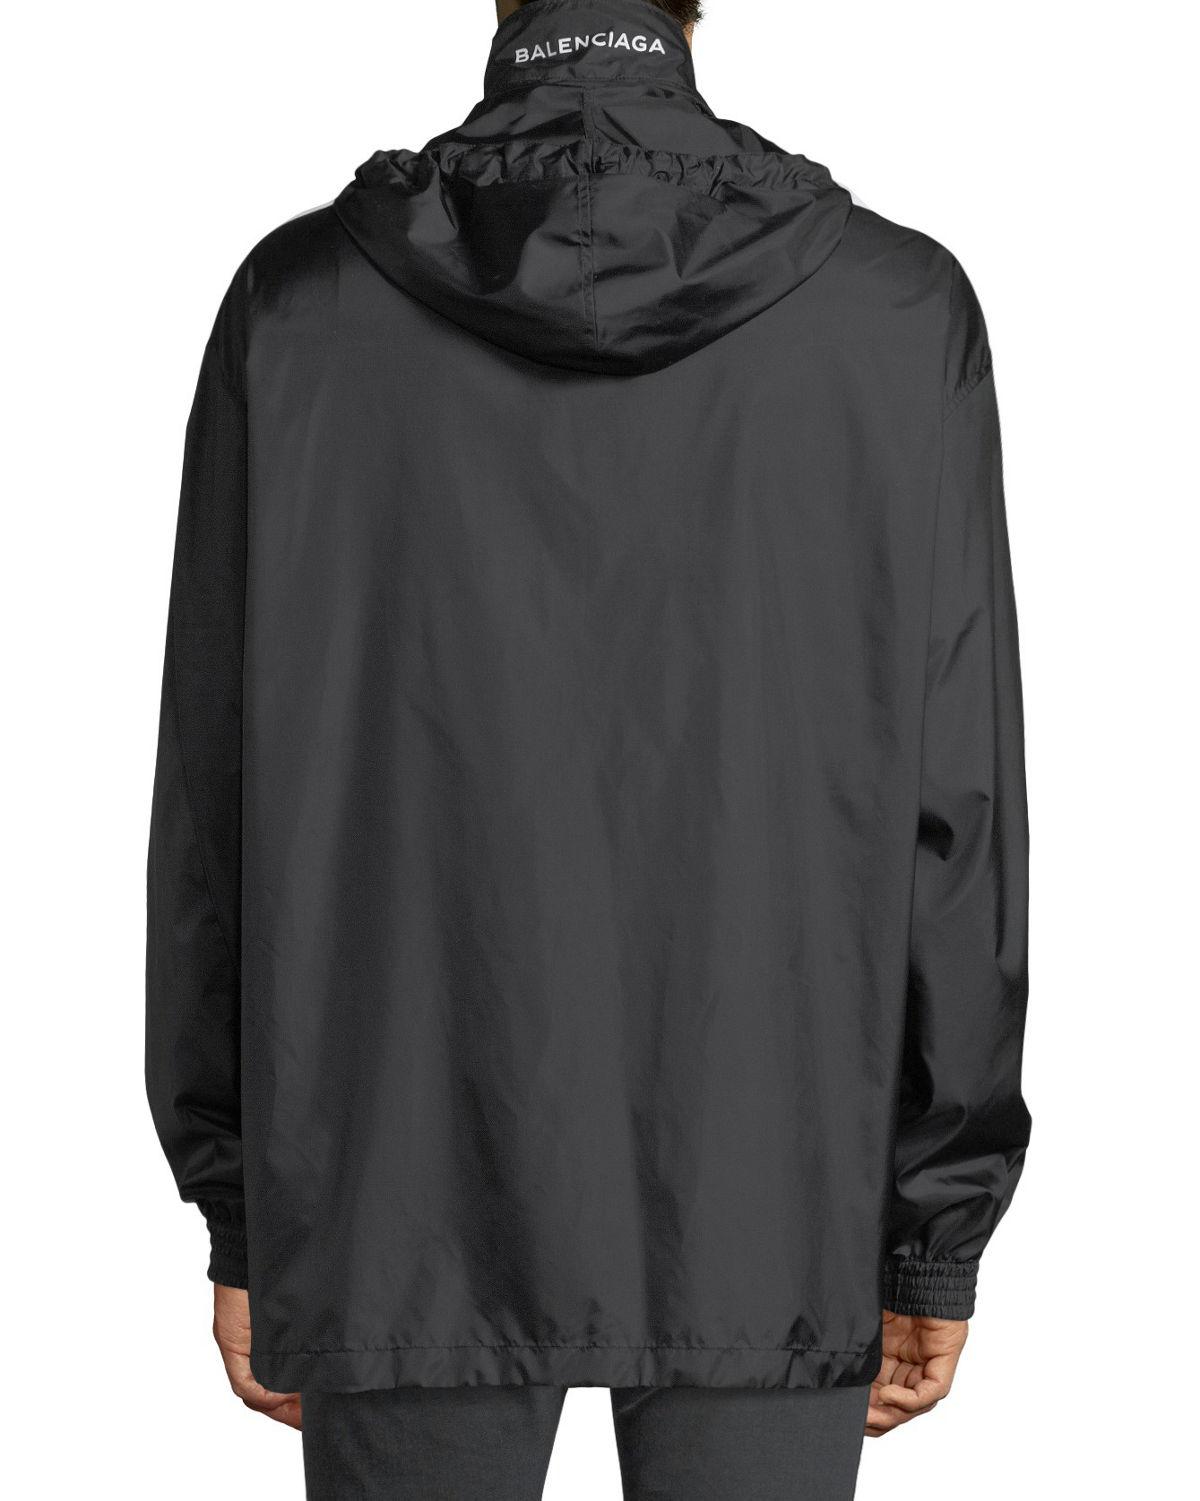 Balenciaga Hooded Logo Tech Jacket in Black for Men - Lyst